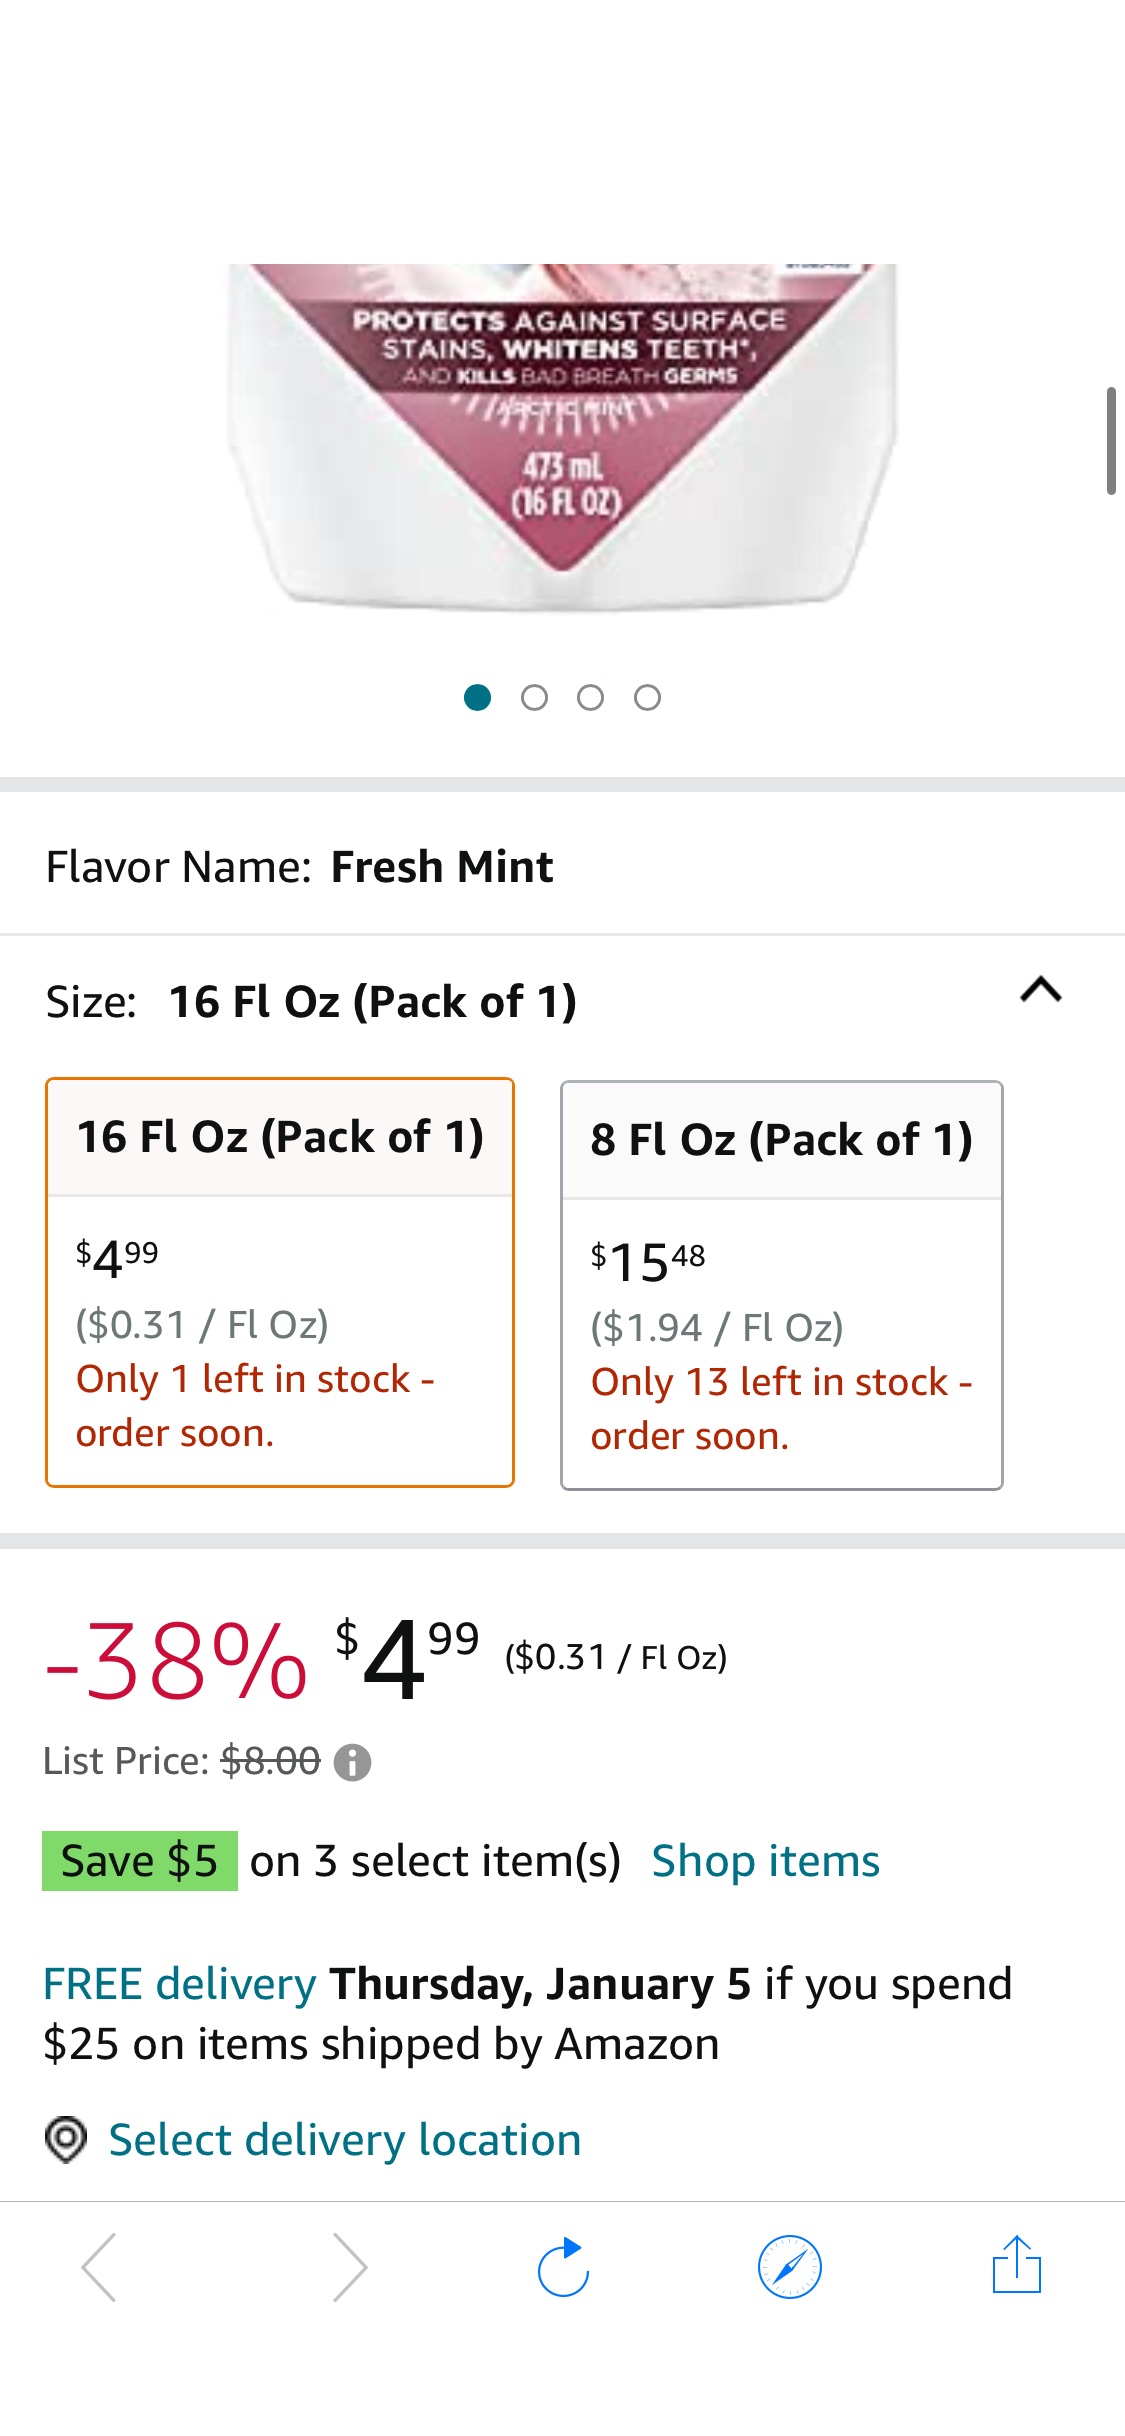 Amazon.com: Crest 3D Wht Rinse Frshm Size 16z Crest 3D Fresh Mint Whitening Rinse : Health & Household